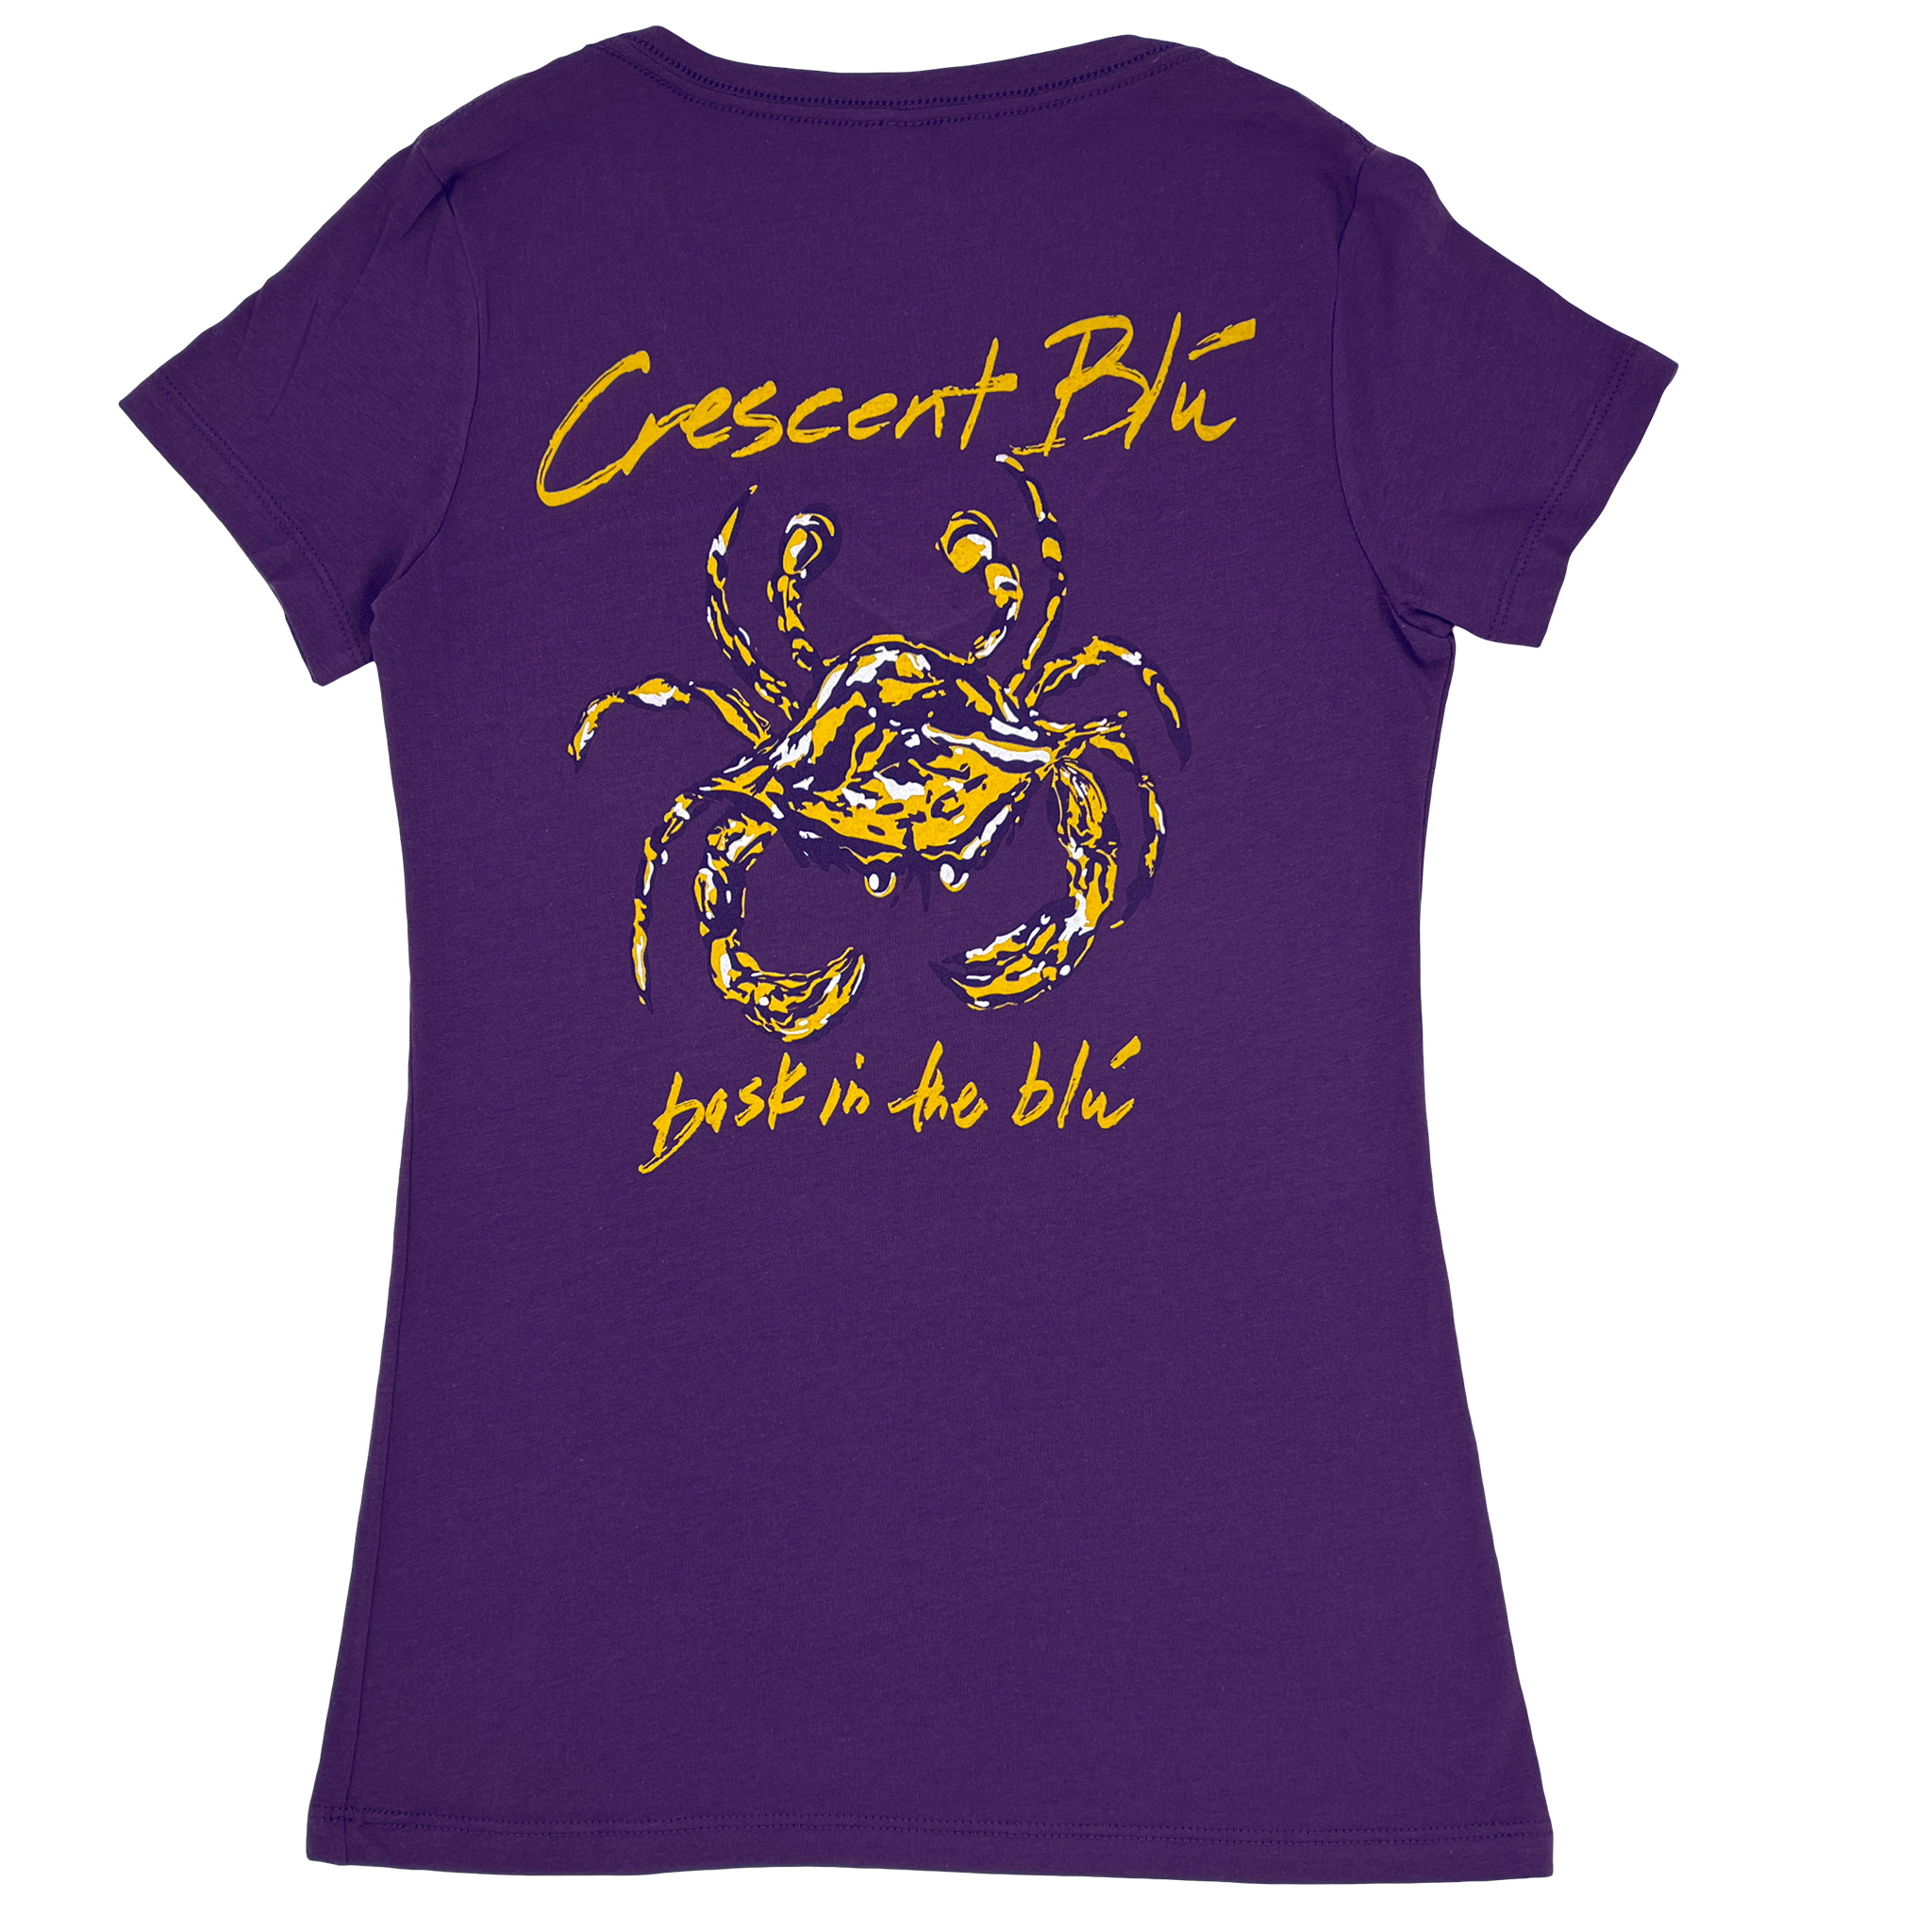 Purple & Gold Ladies cut V-neck Short Sleeve T-shirt